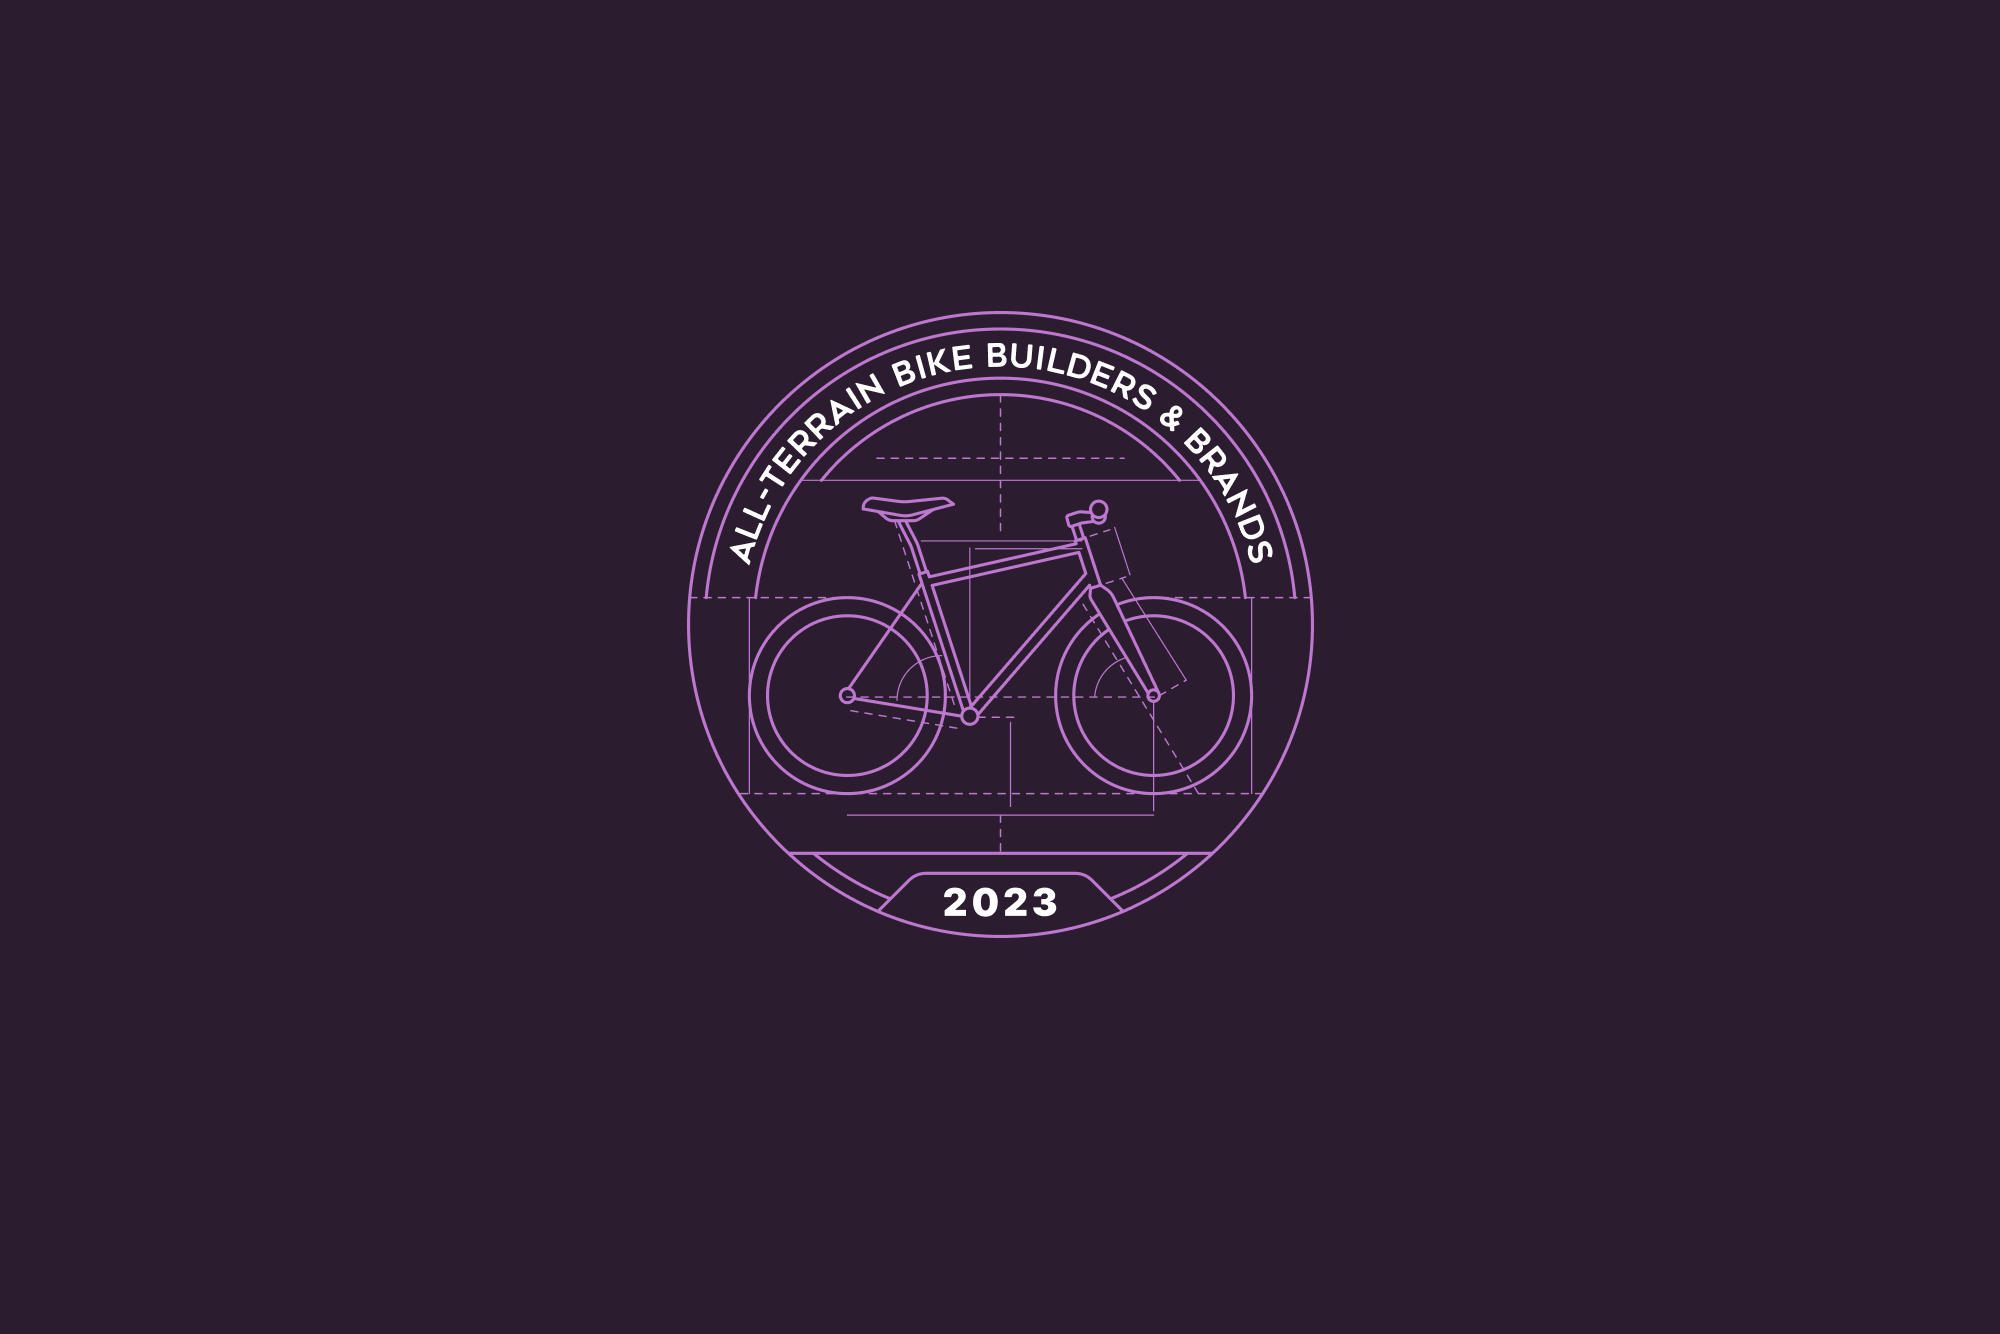 28 All Terrain Bike Builders & Brands For 2023